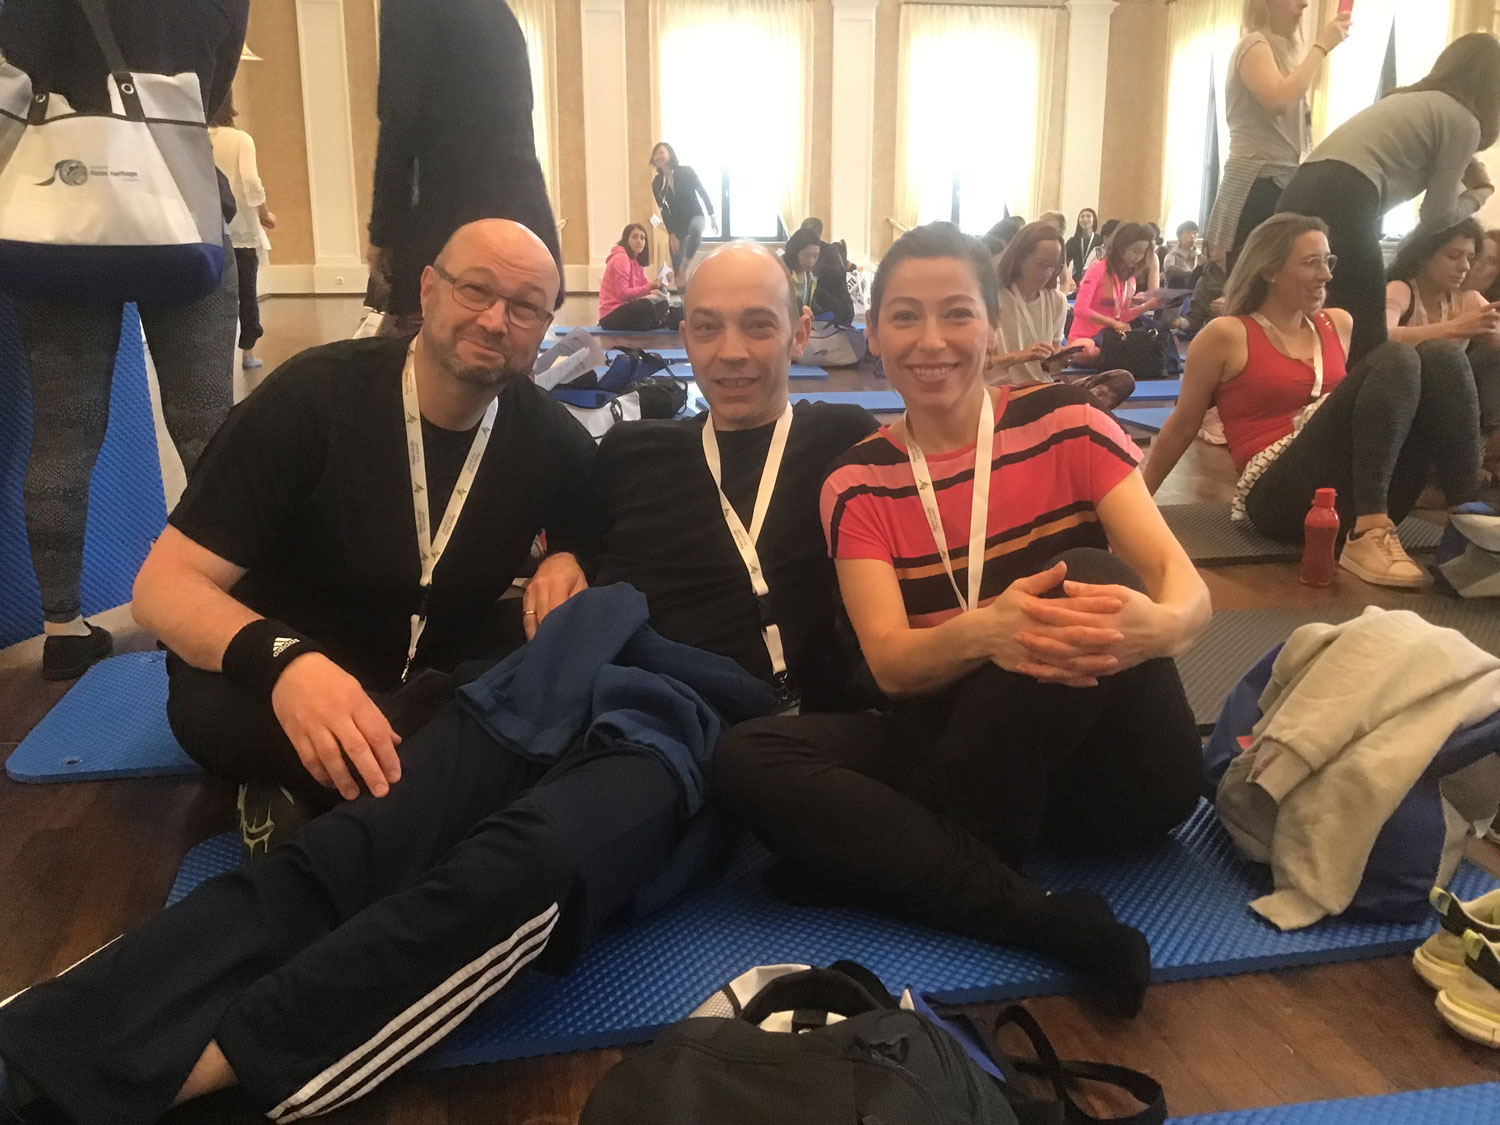 Ralf Bornat, Gianfranco and Chrissoula - all three are trainees at pilates-powers.